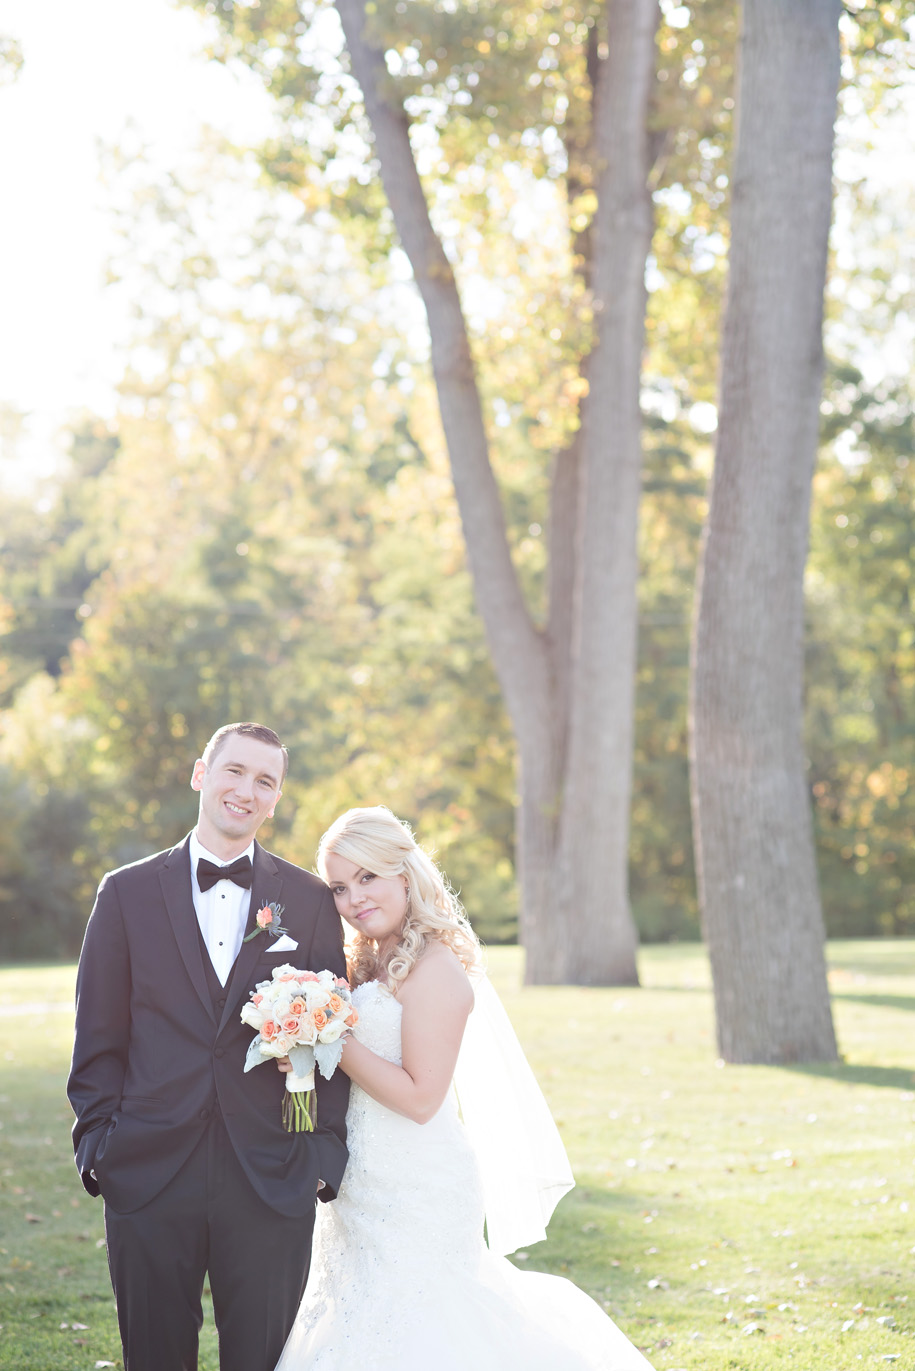 George George Park Bride and groom portraits at a fall wedding in Michigan by Kari Dawson